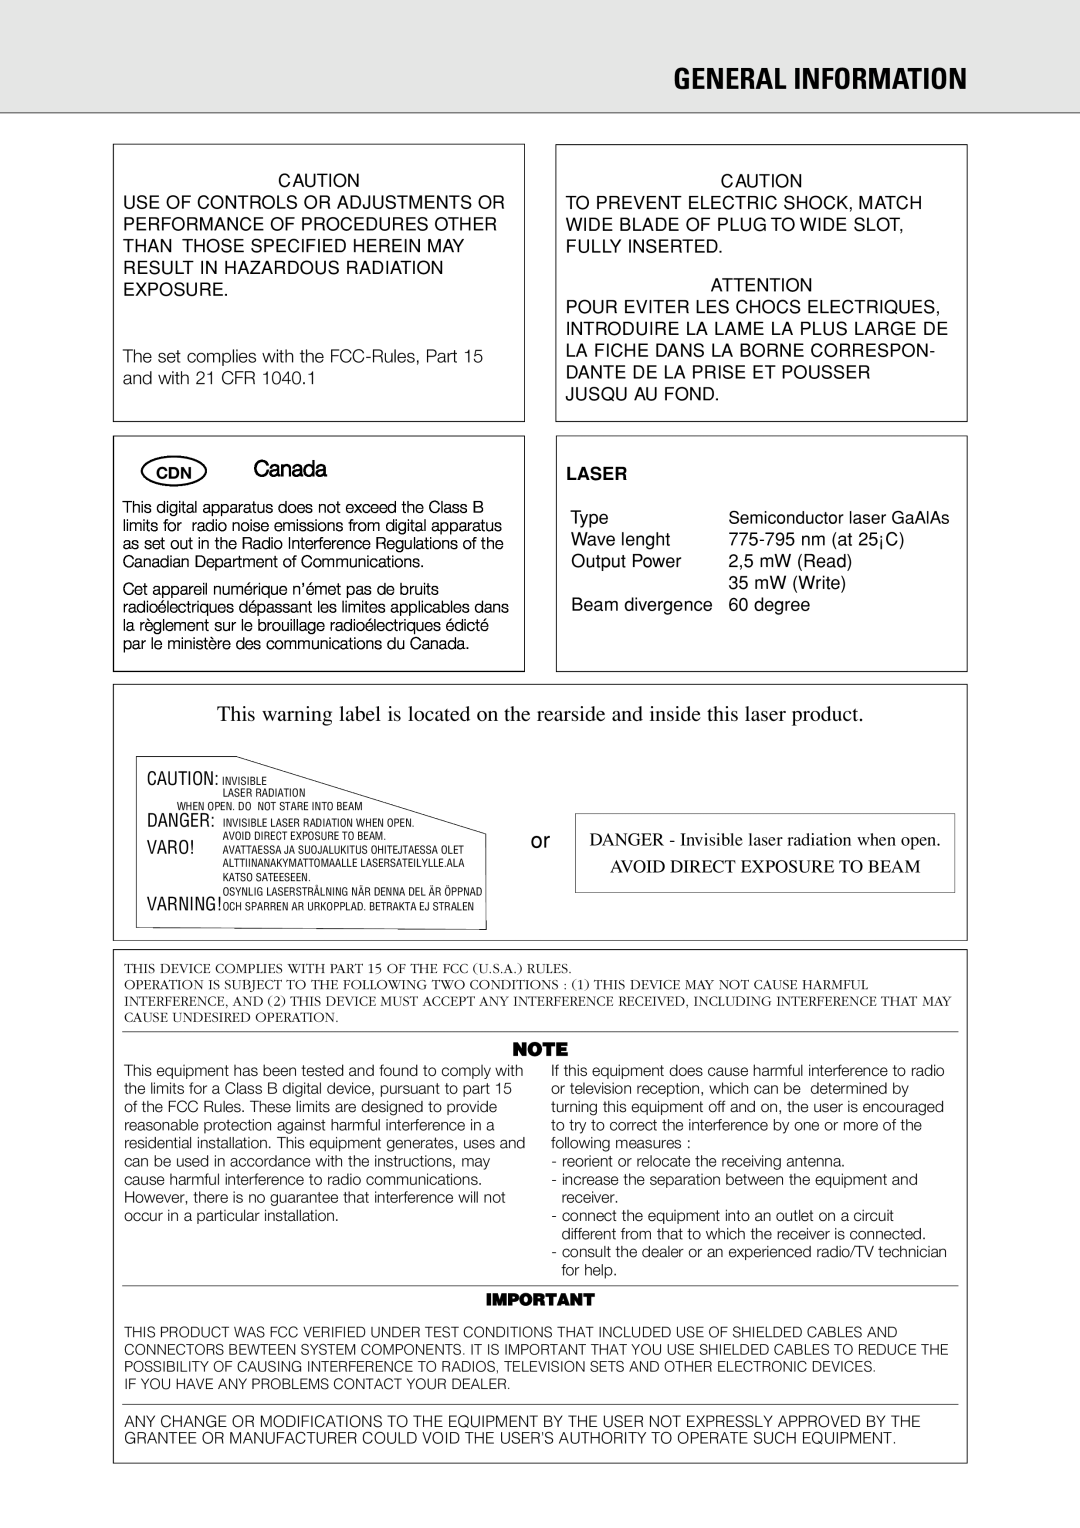 Philips CDR 560, CDR 538 manual General Information, CDN Canada, Laser 